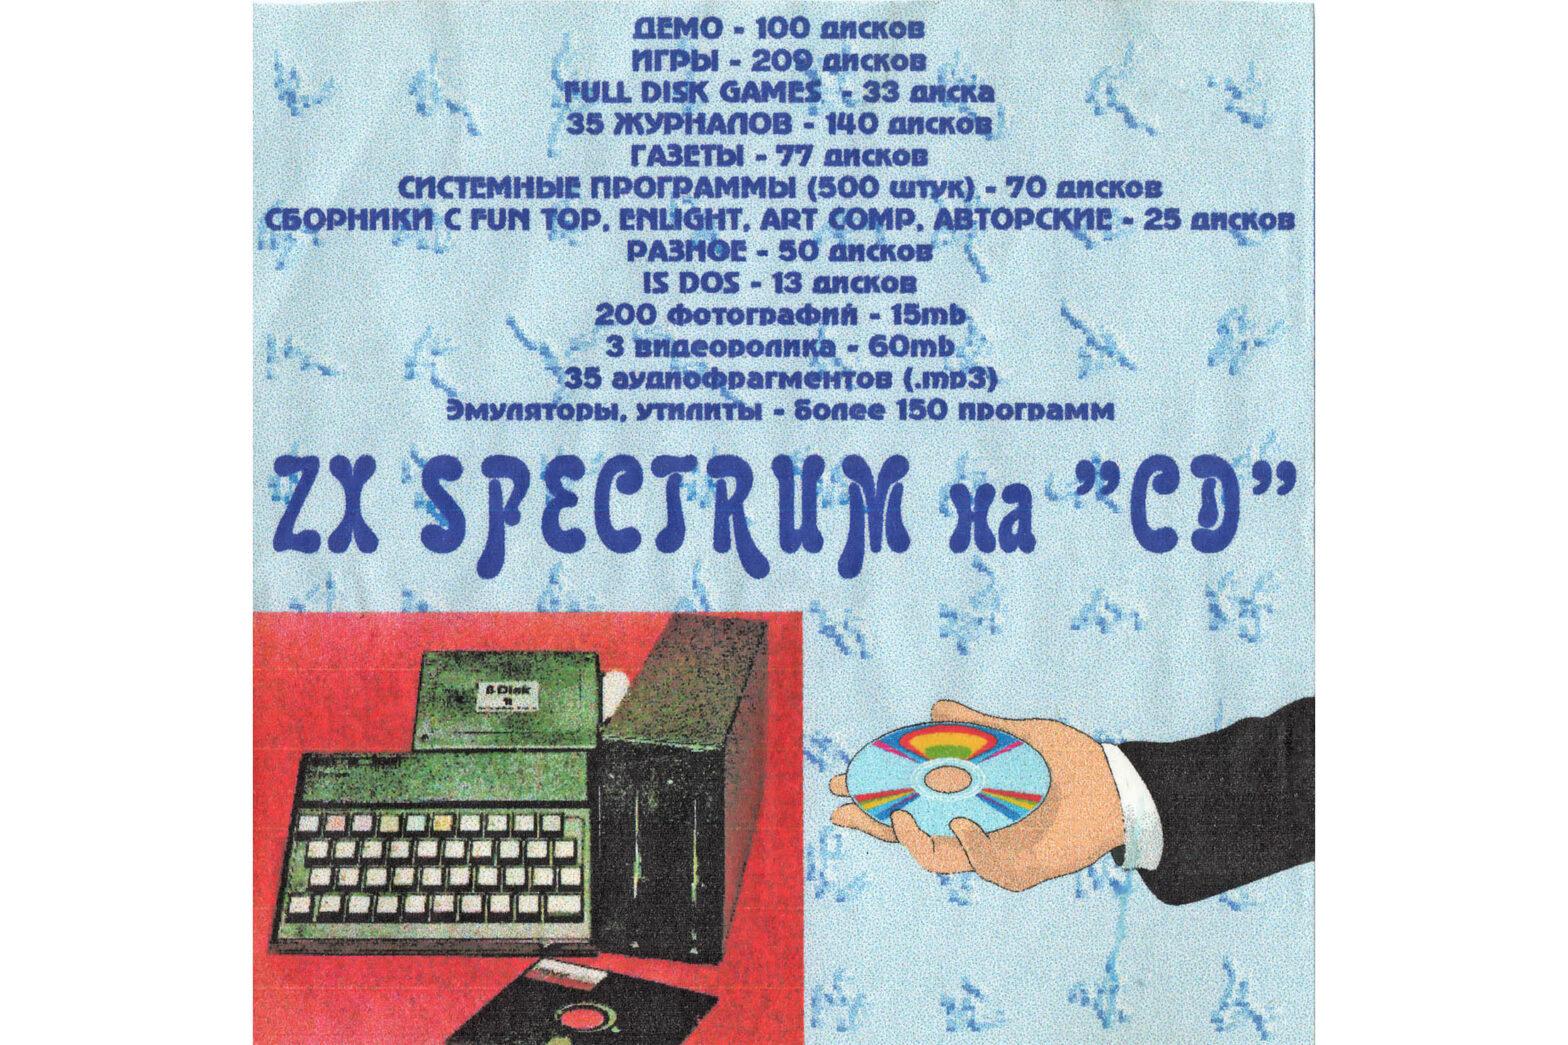 ZX Spectrum на CD - обложка статьи